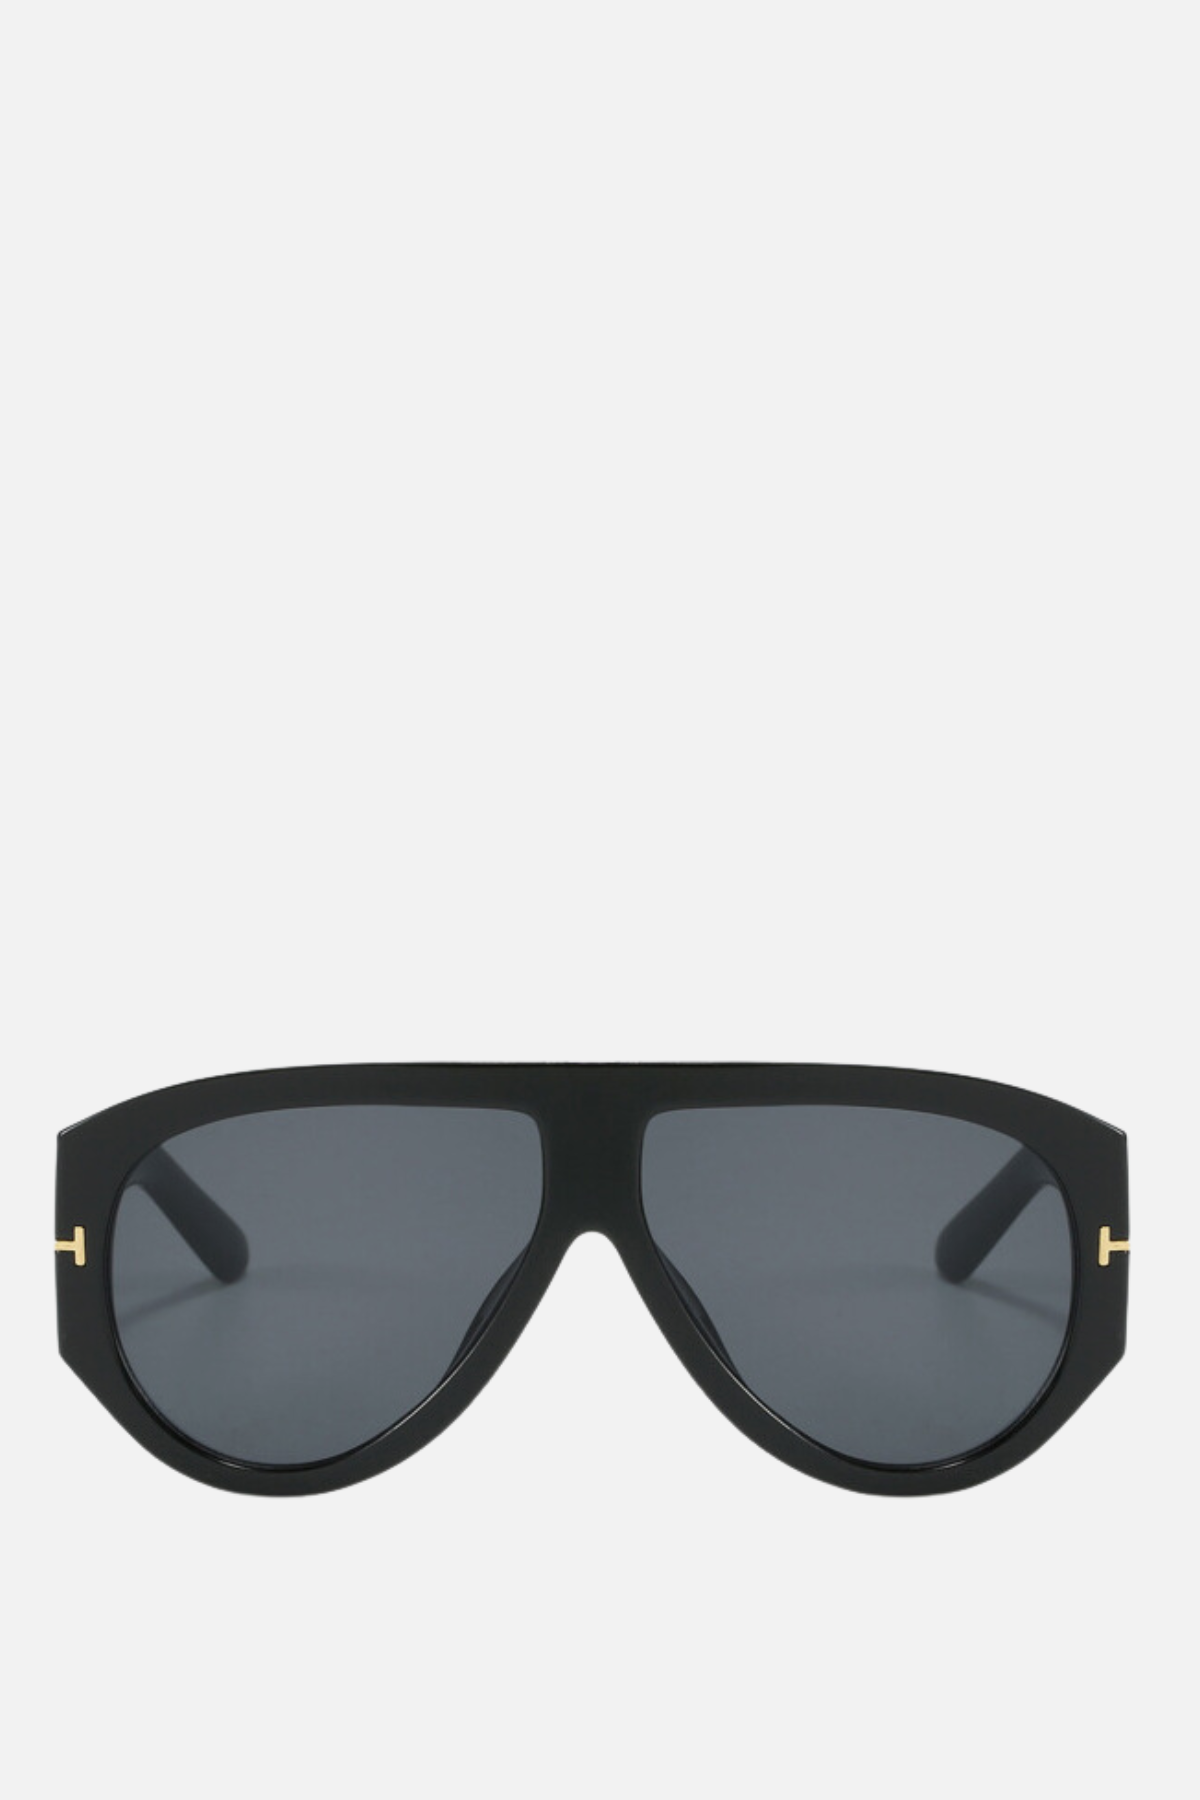 MONACO Black Oversized Sunglasses